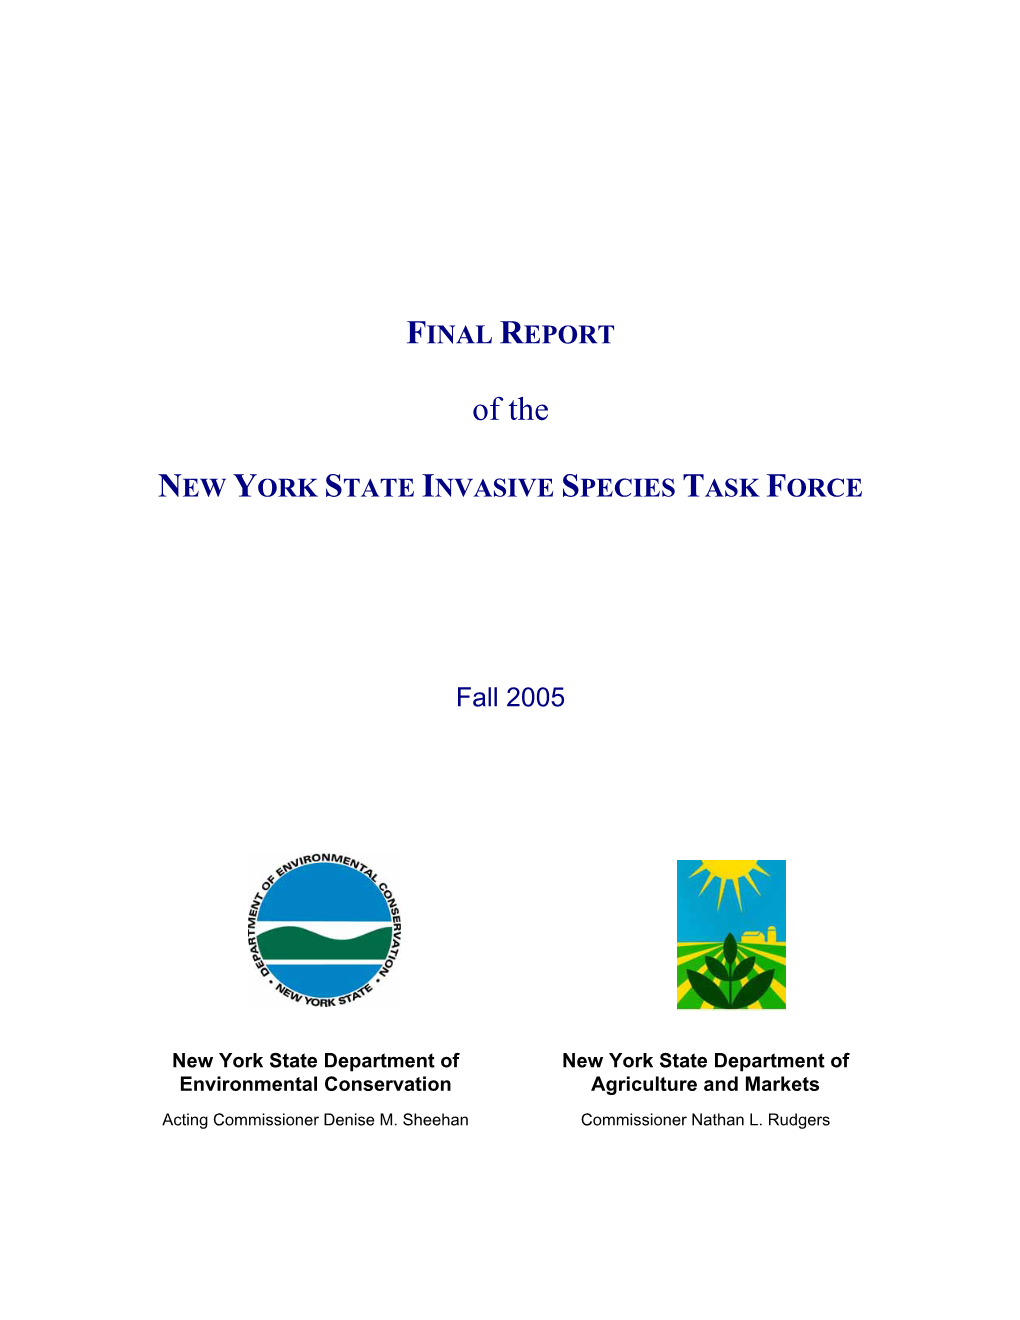 New York State Invasive Species Task Force